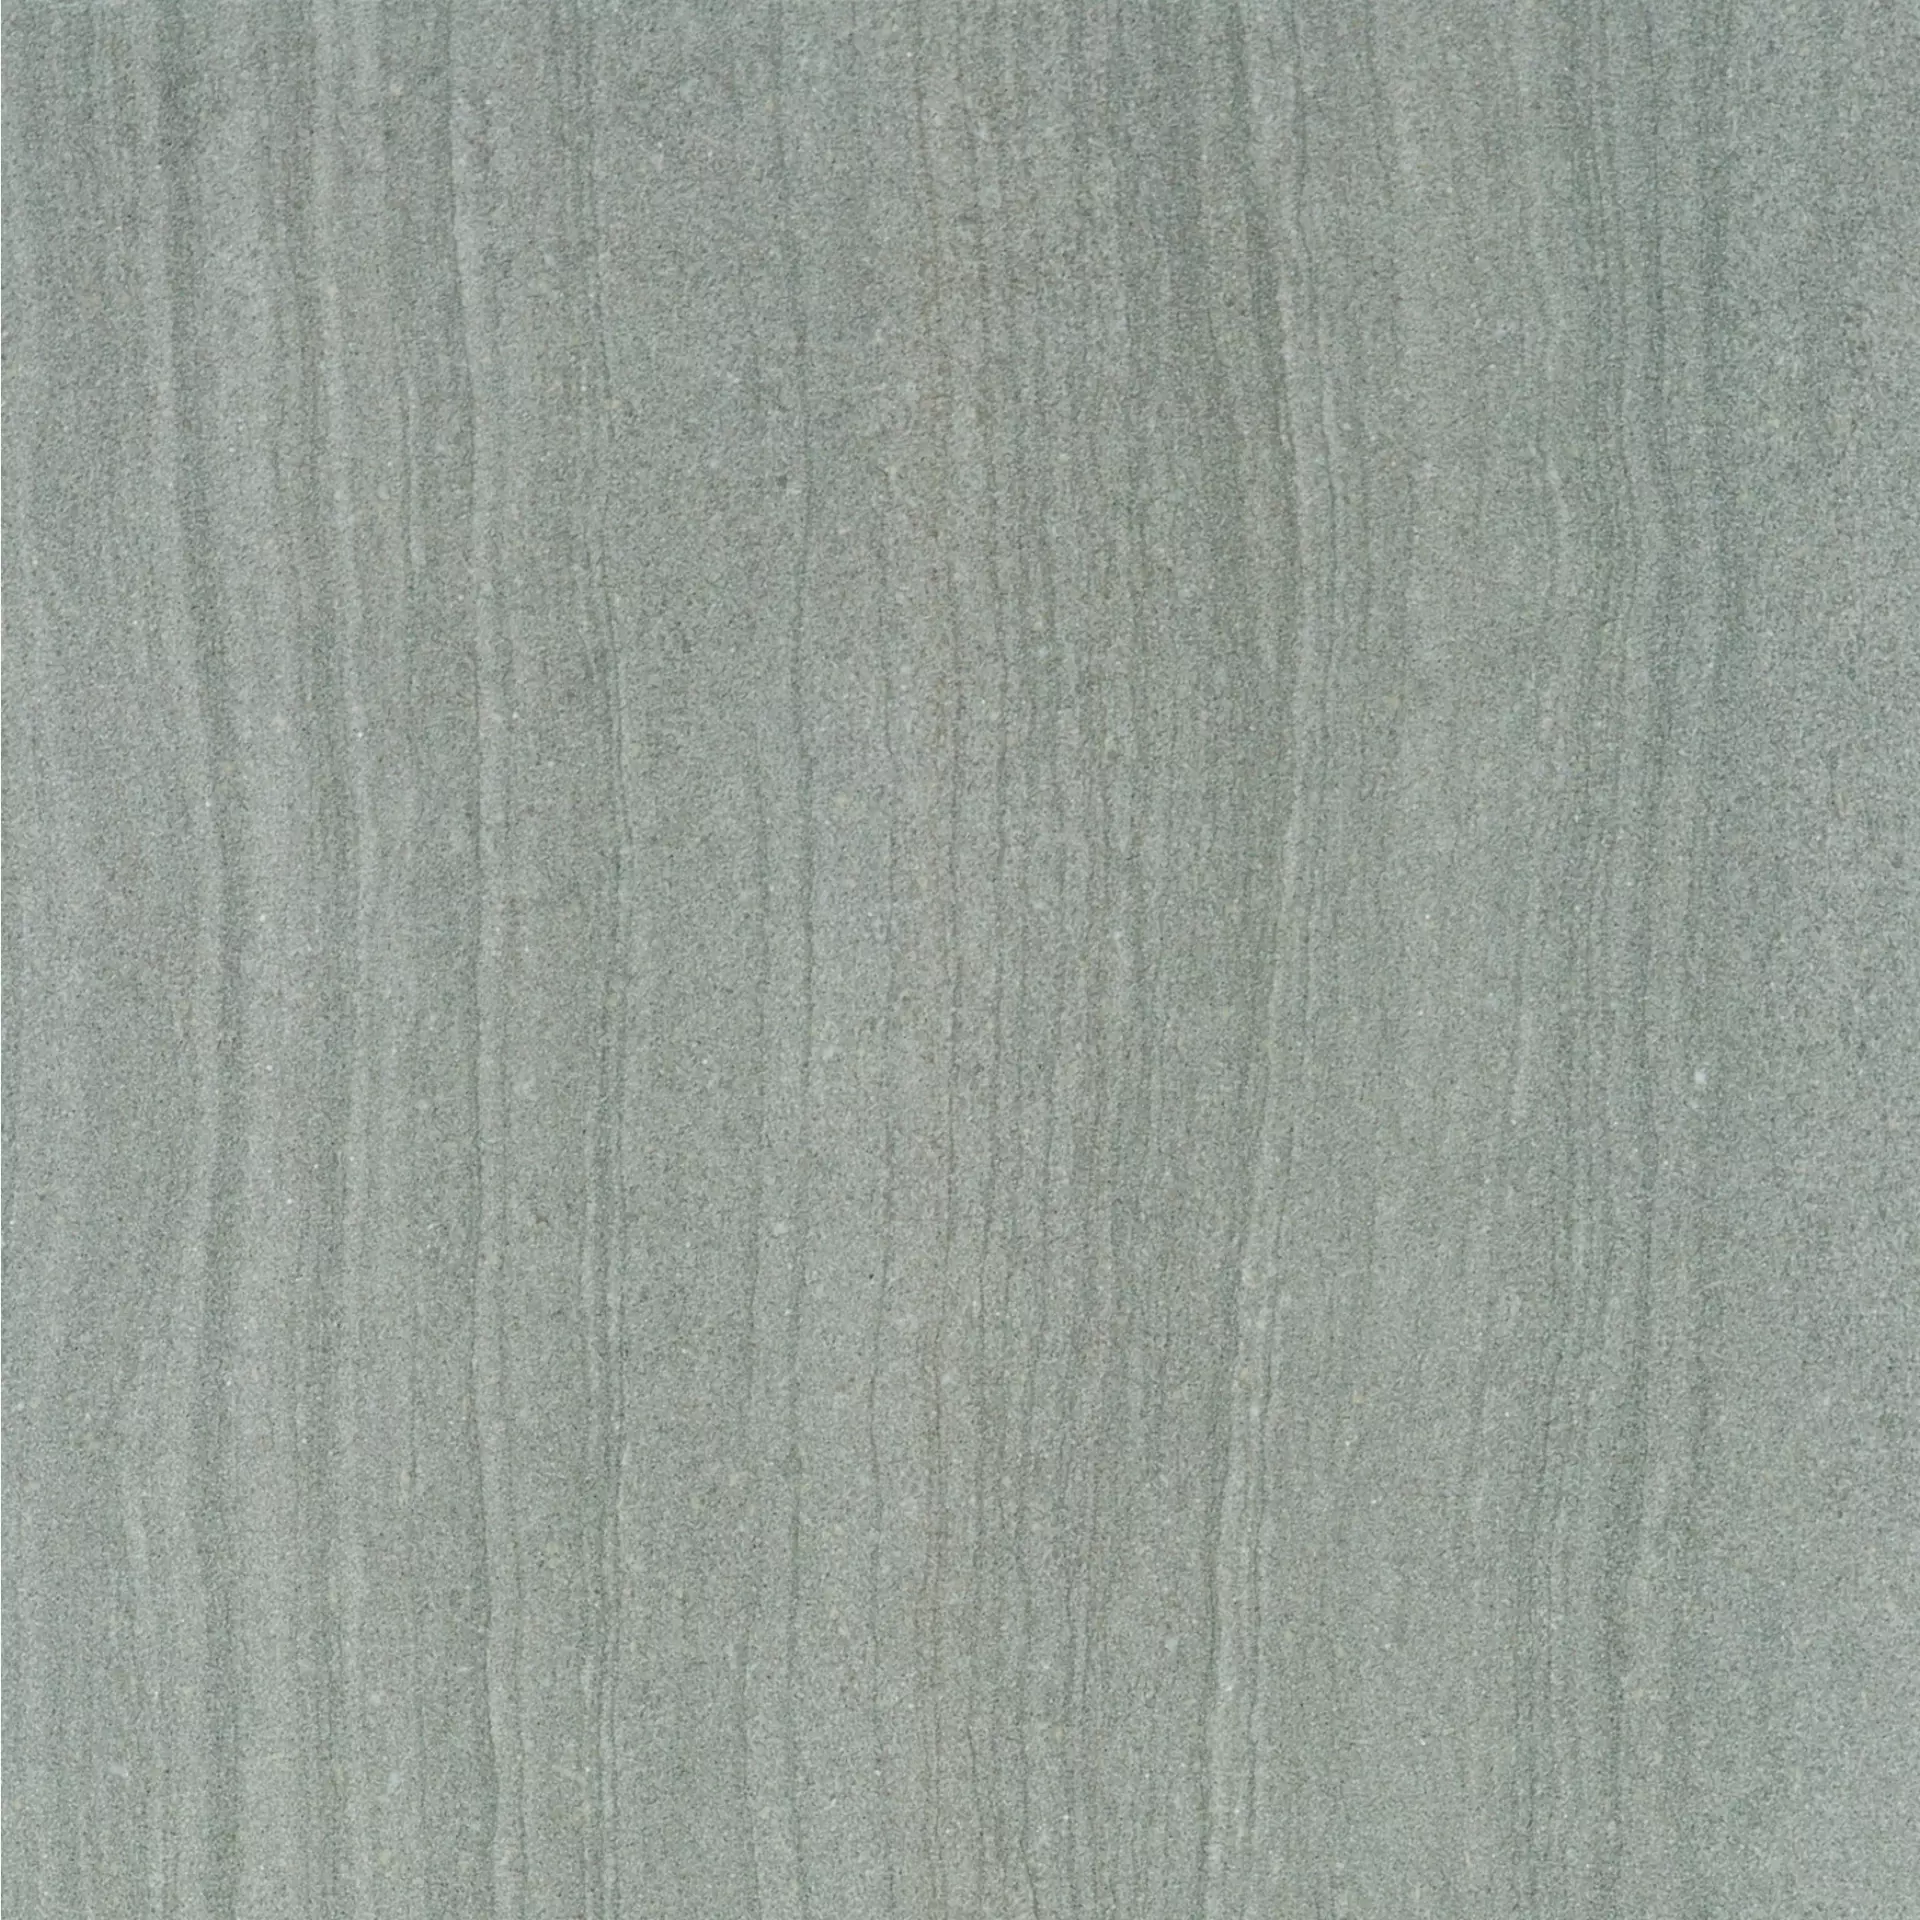 Ergon Stone Project Grey Naturale Falda E1E8 60x60cm rectified 9,5mm